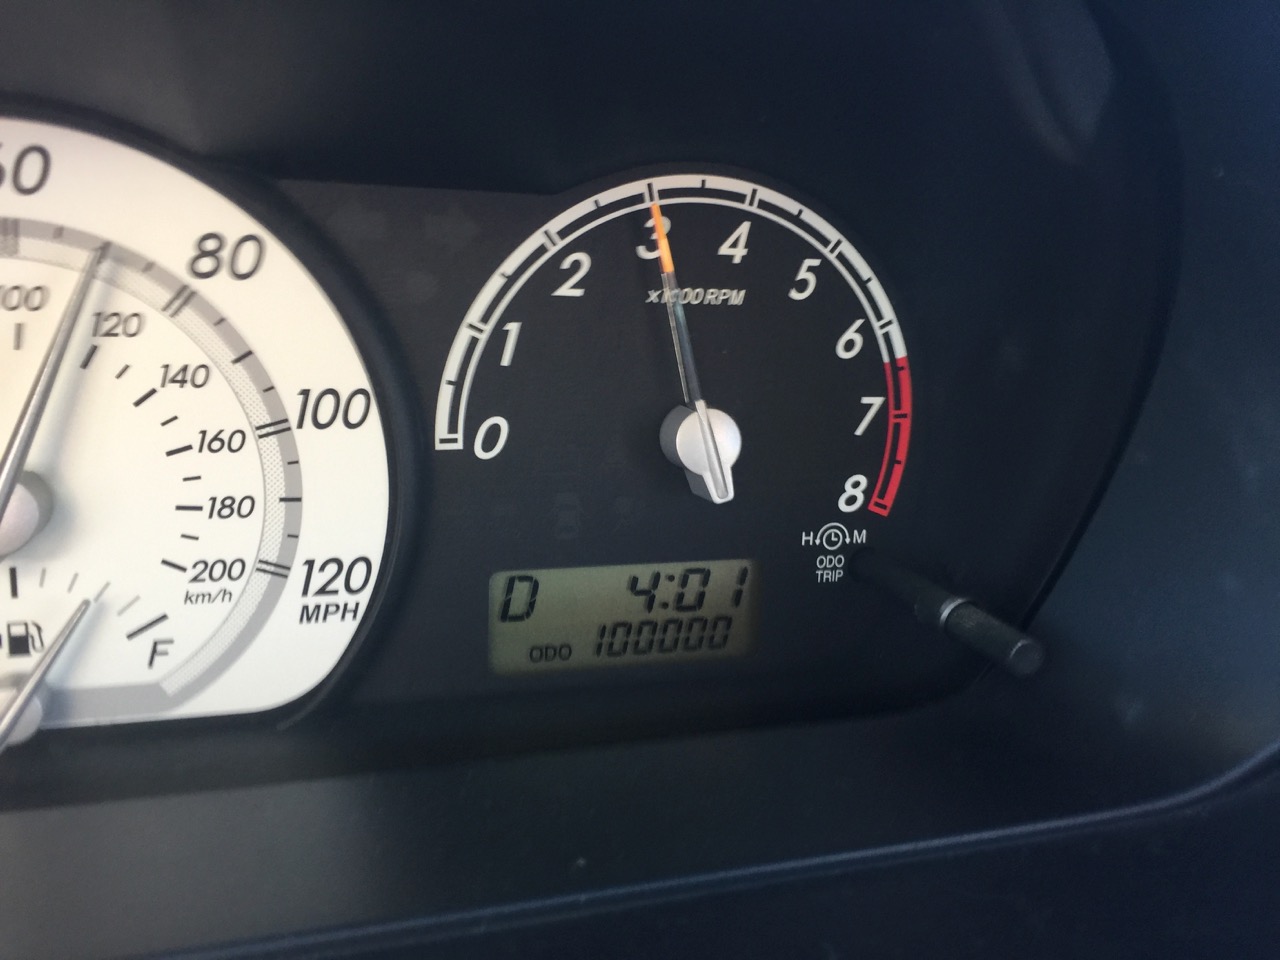 car odometer reading 100,000 miles